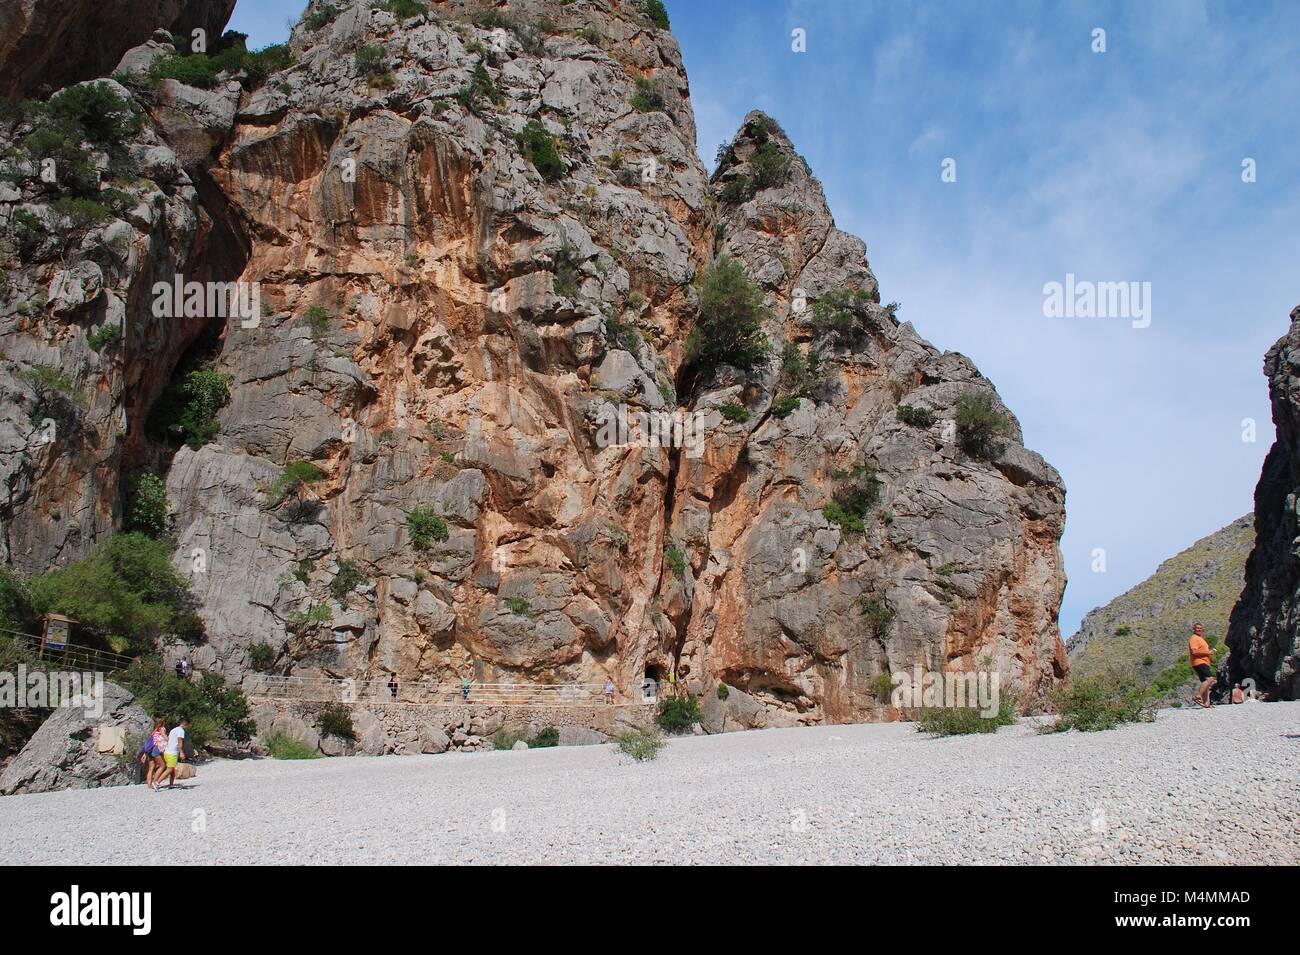 The Torrent de Pareis river gorge at Sa Calobra on the Spanish island of Majorca. Stock Photo